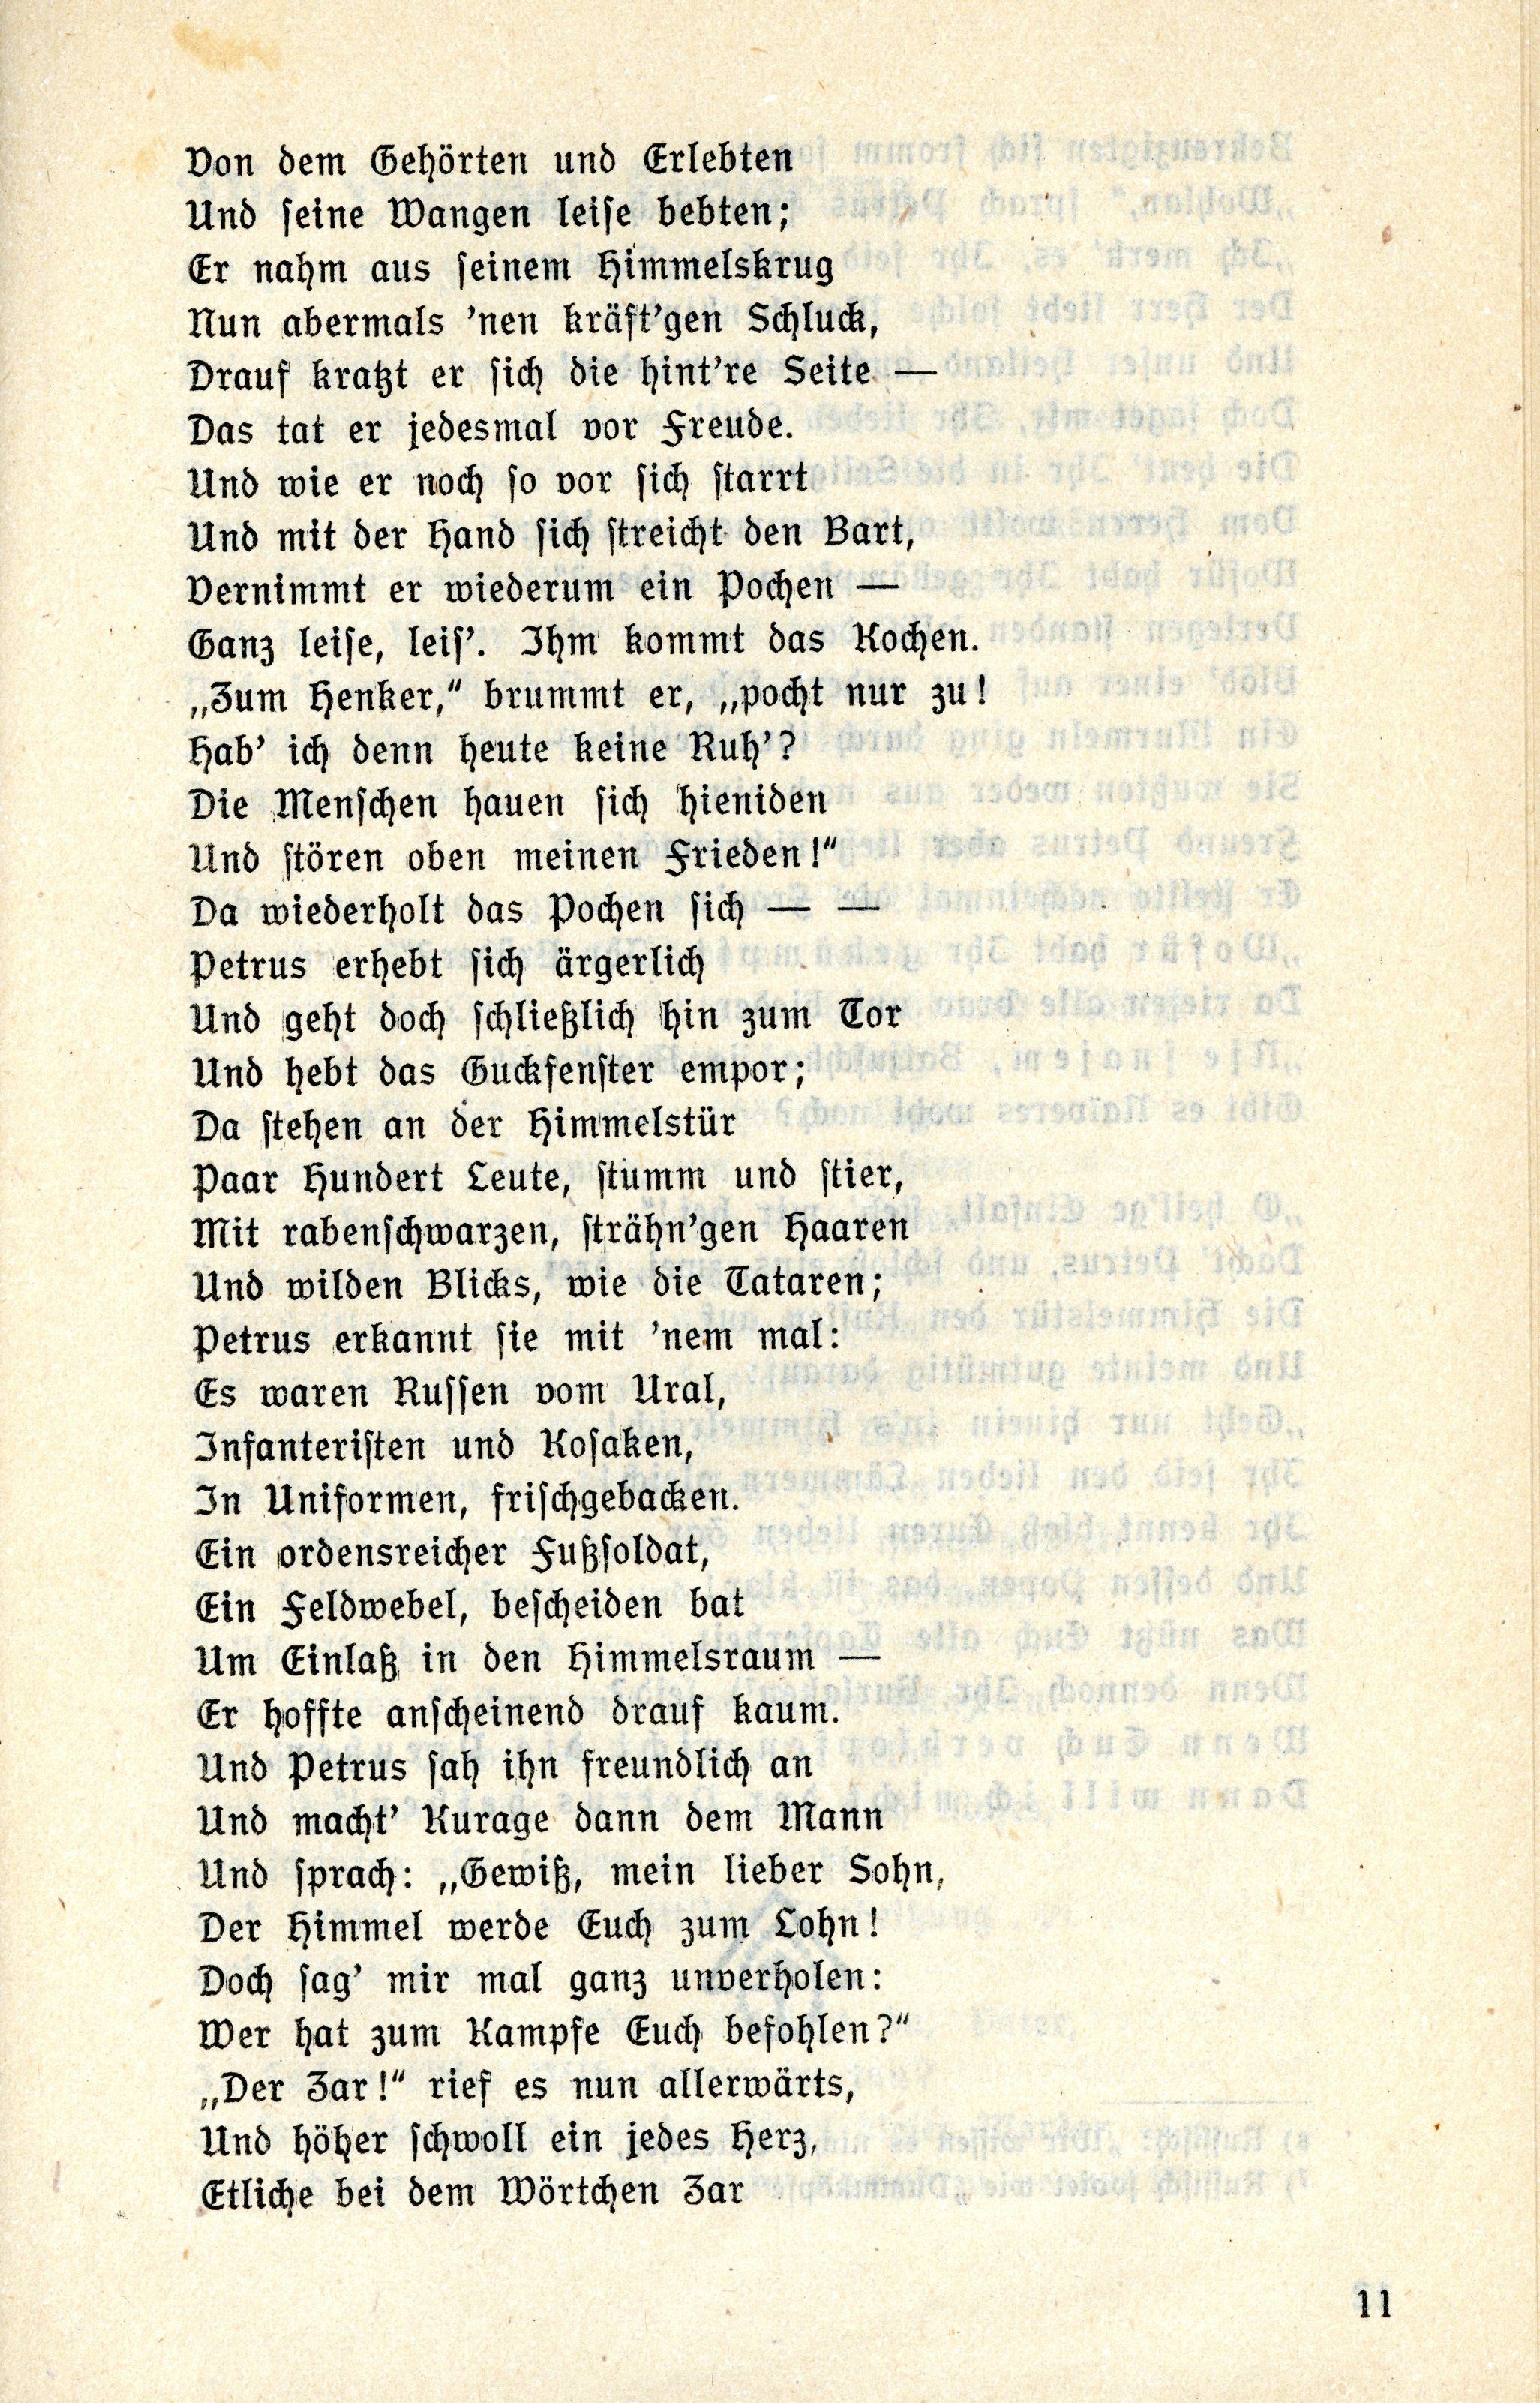 Der Balte im Maulkorb (1917) | 12. (11) Основной текст